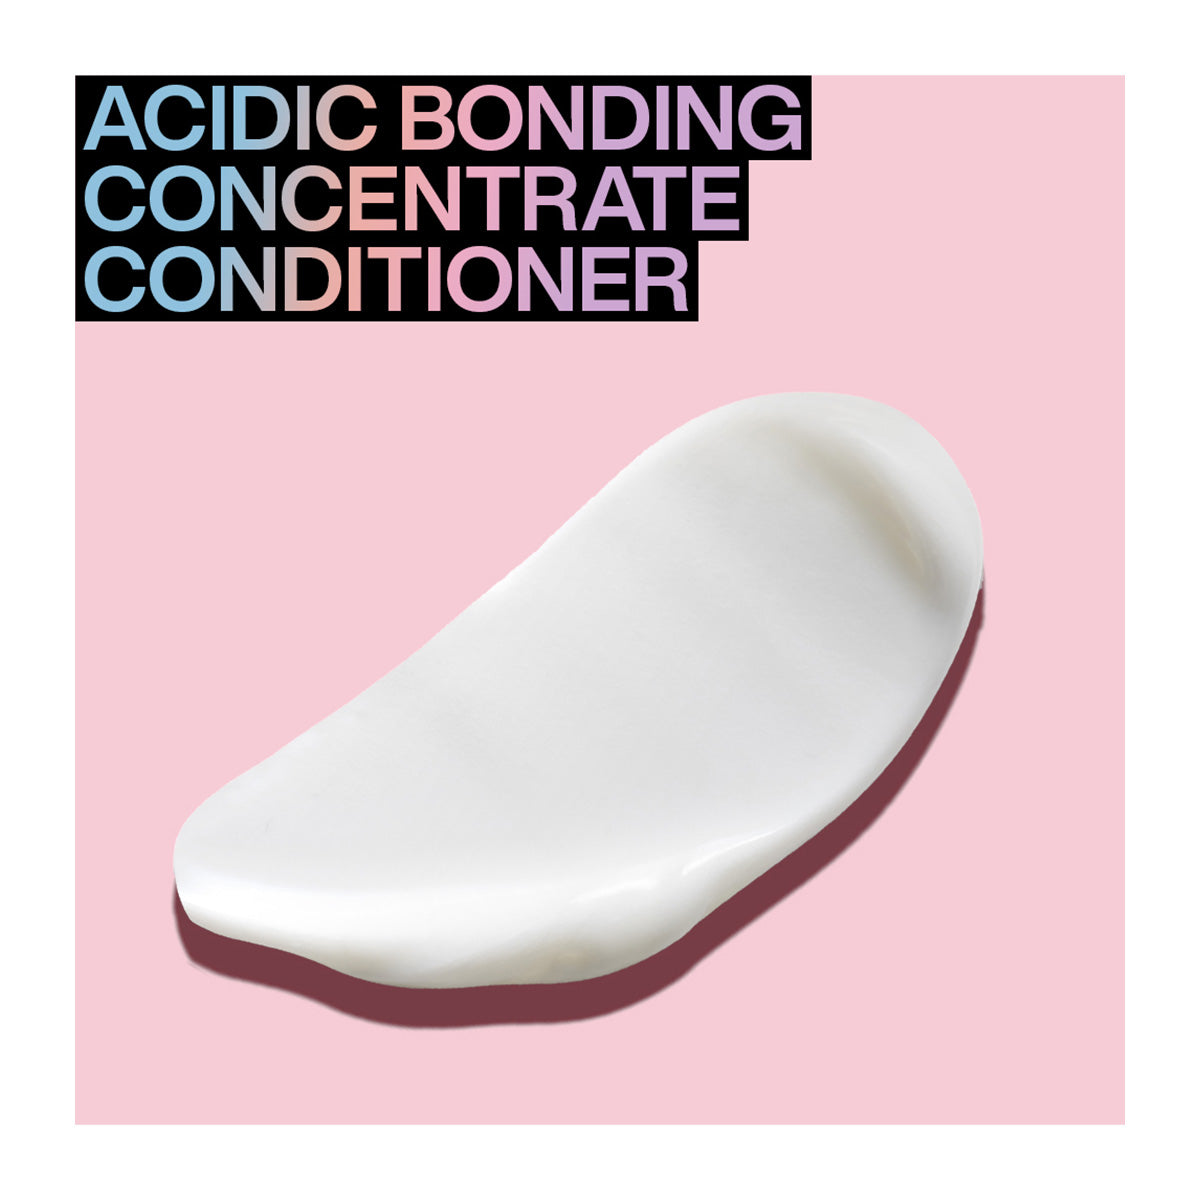 Redken Acidic Bonding Concentrate Conditioner Για Ξηρά Ταλαιπωρημένα &amp; Βαμμένα Μαλλιά 300ml